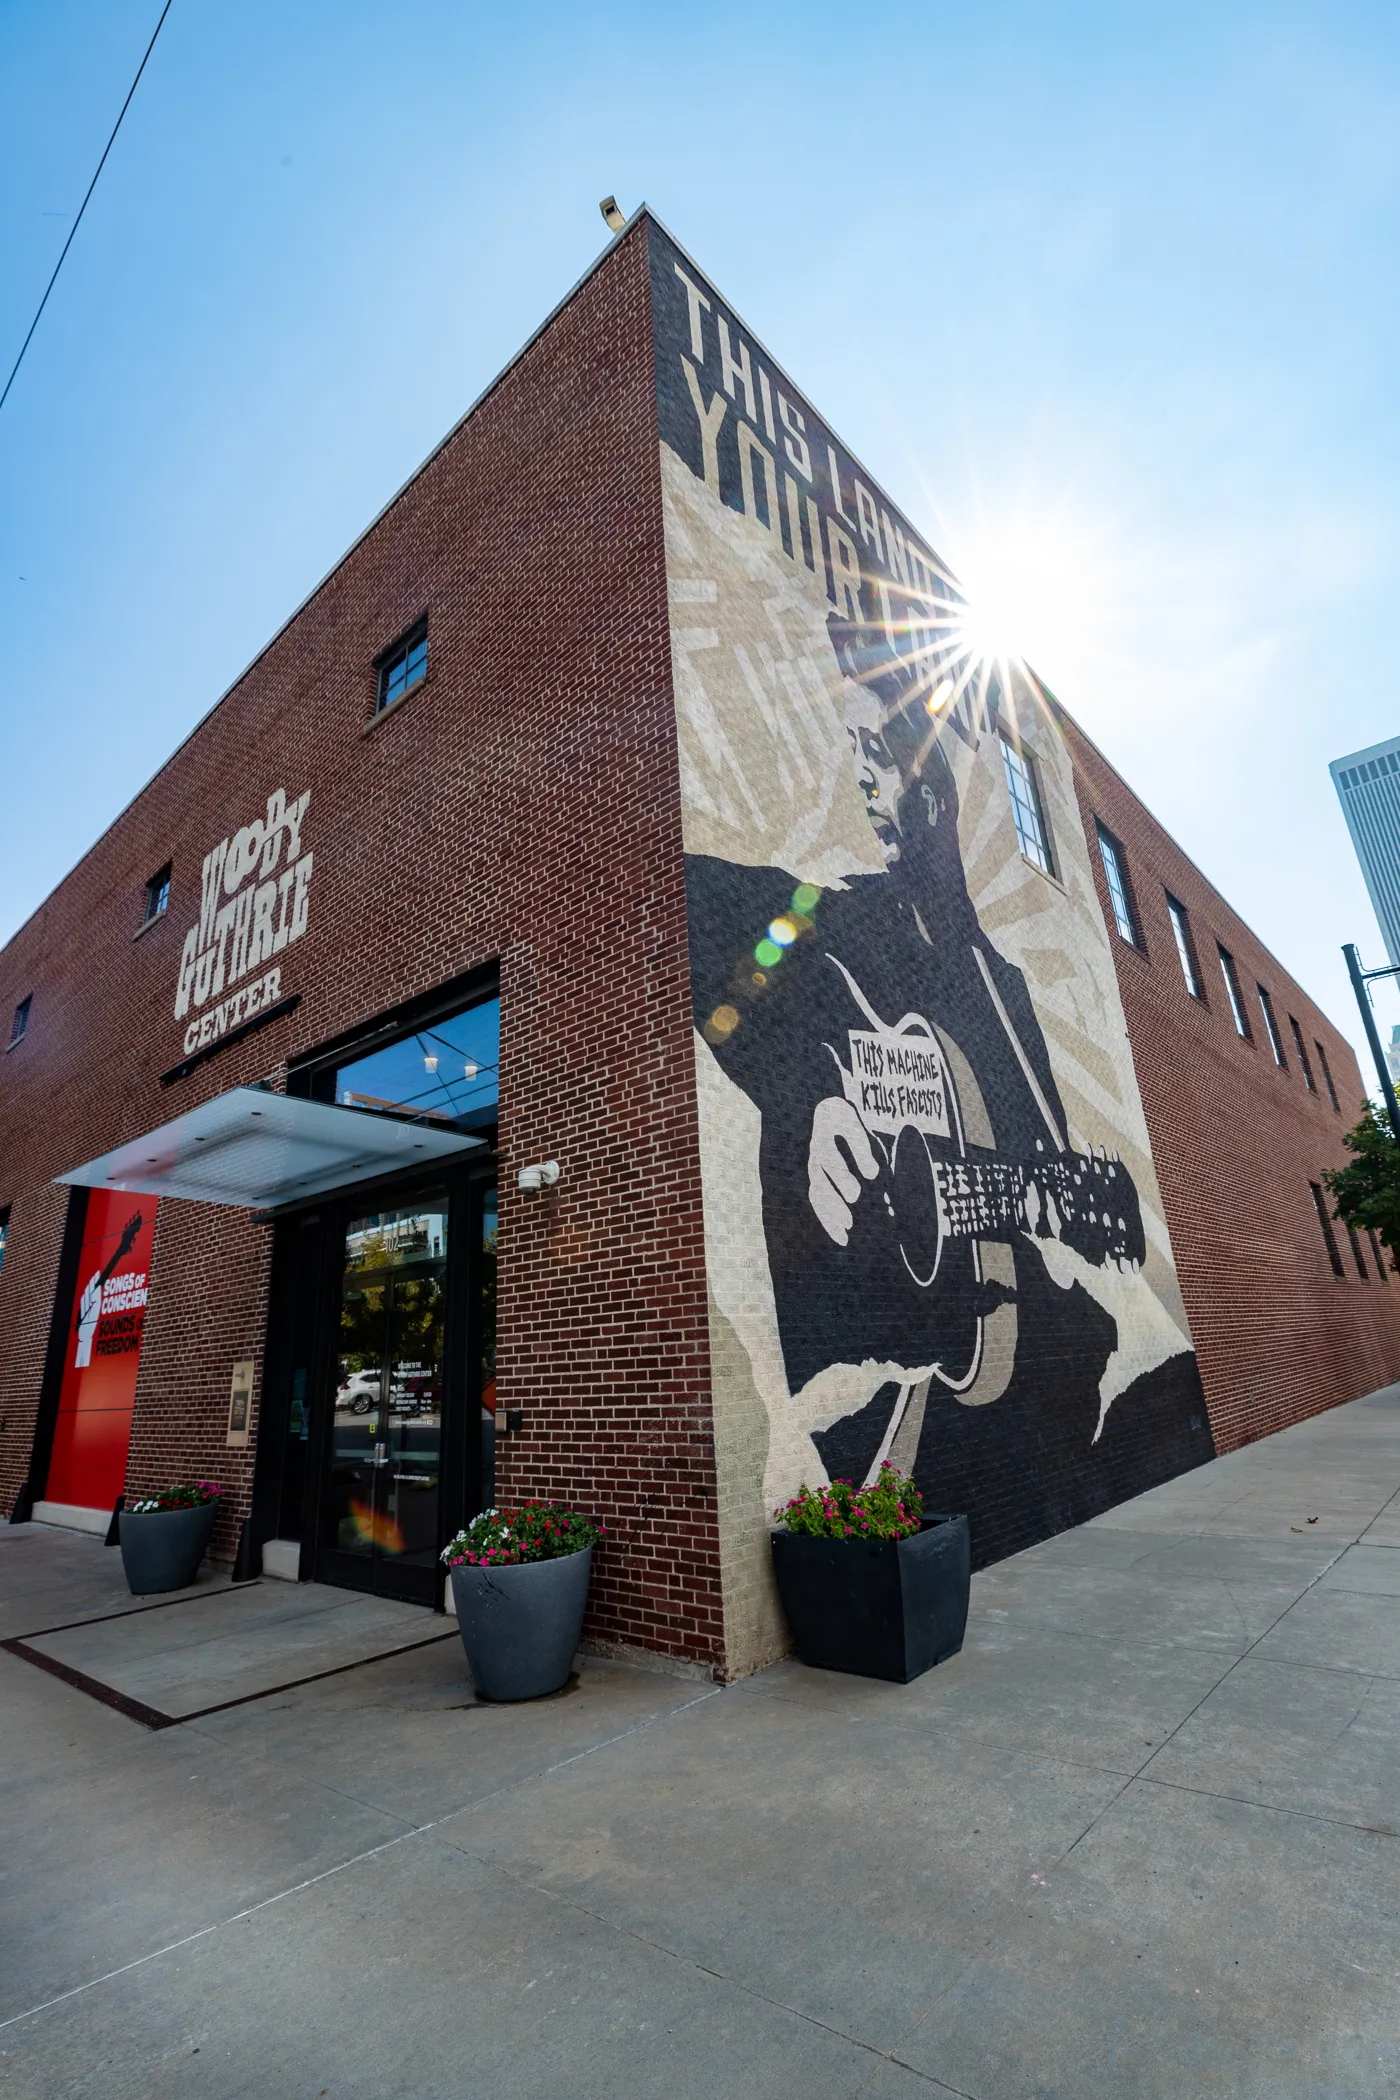 Woody Guthrie Mural in Tulsa, Oklahoma